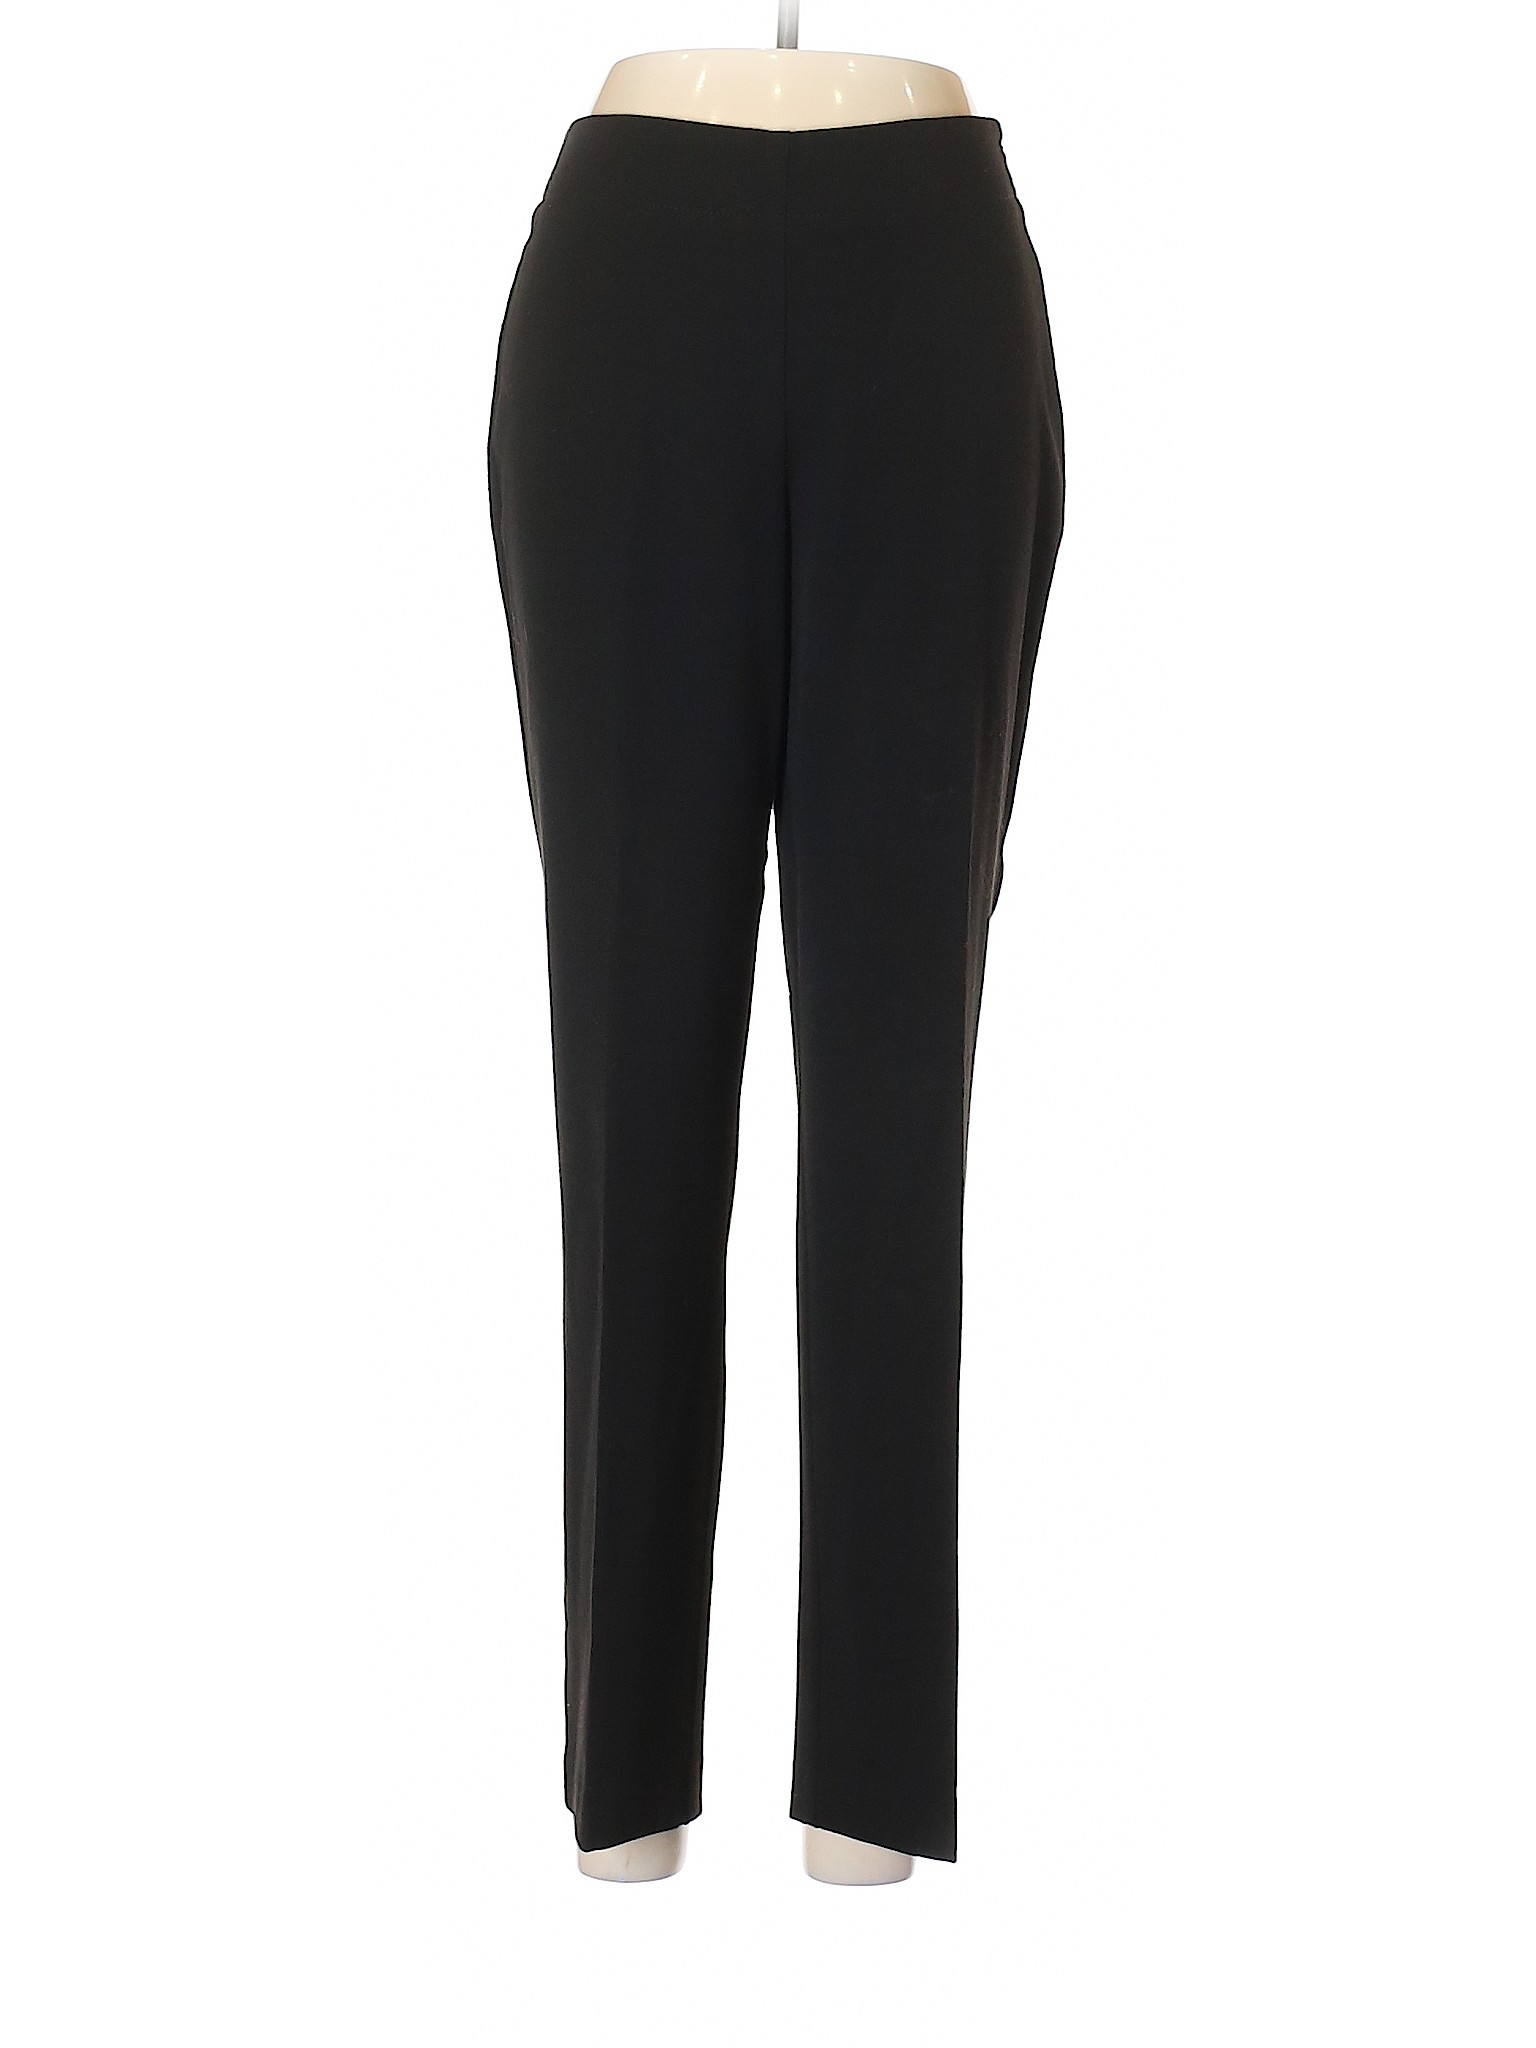 Talbots Women Black Dress Pants 8 Petites | eBay